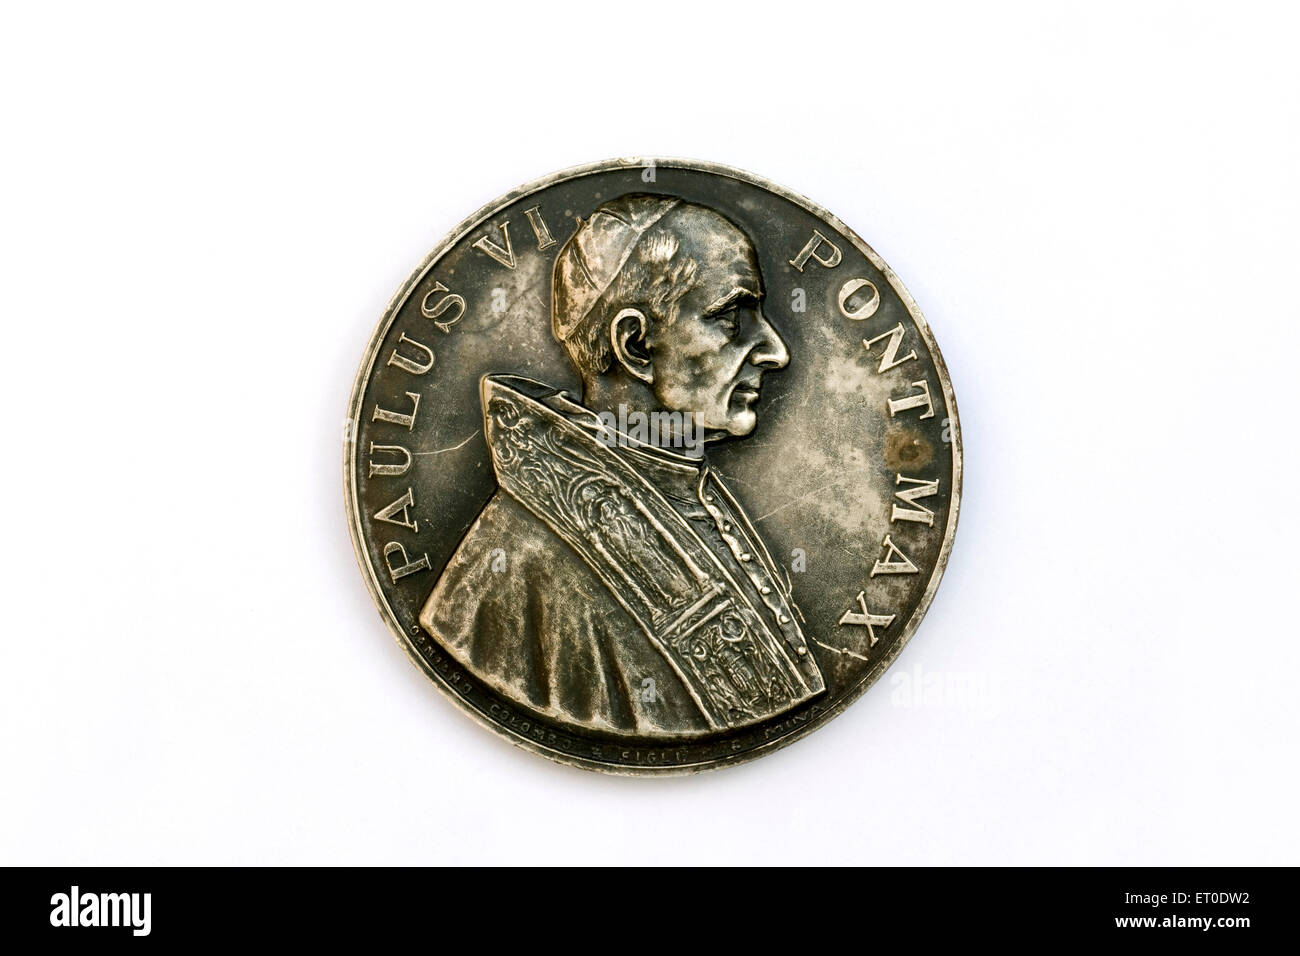 Pope Paulus VI Pont Max medal Stock Photo